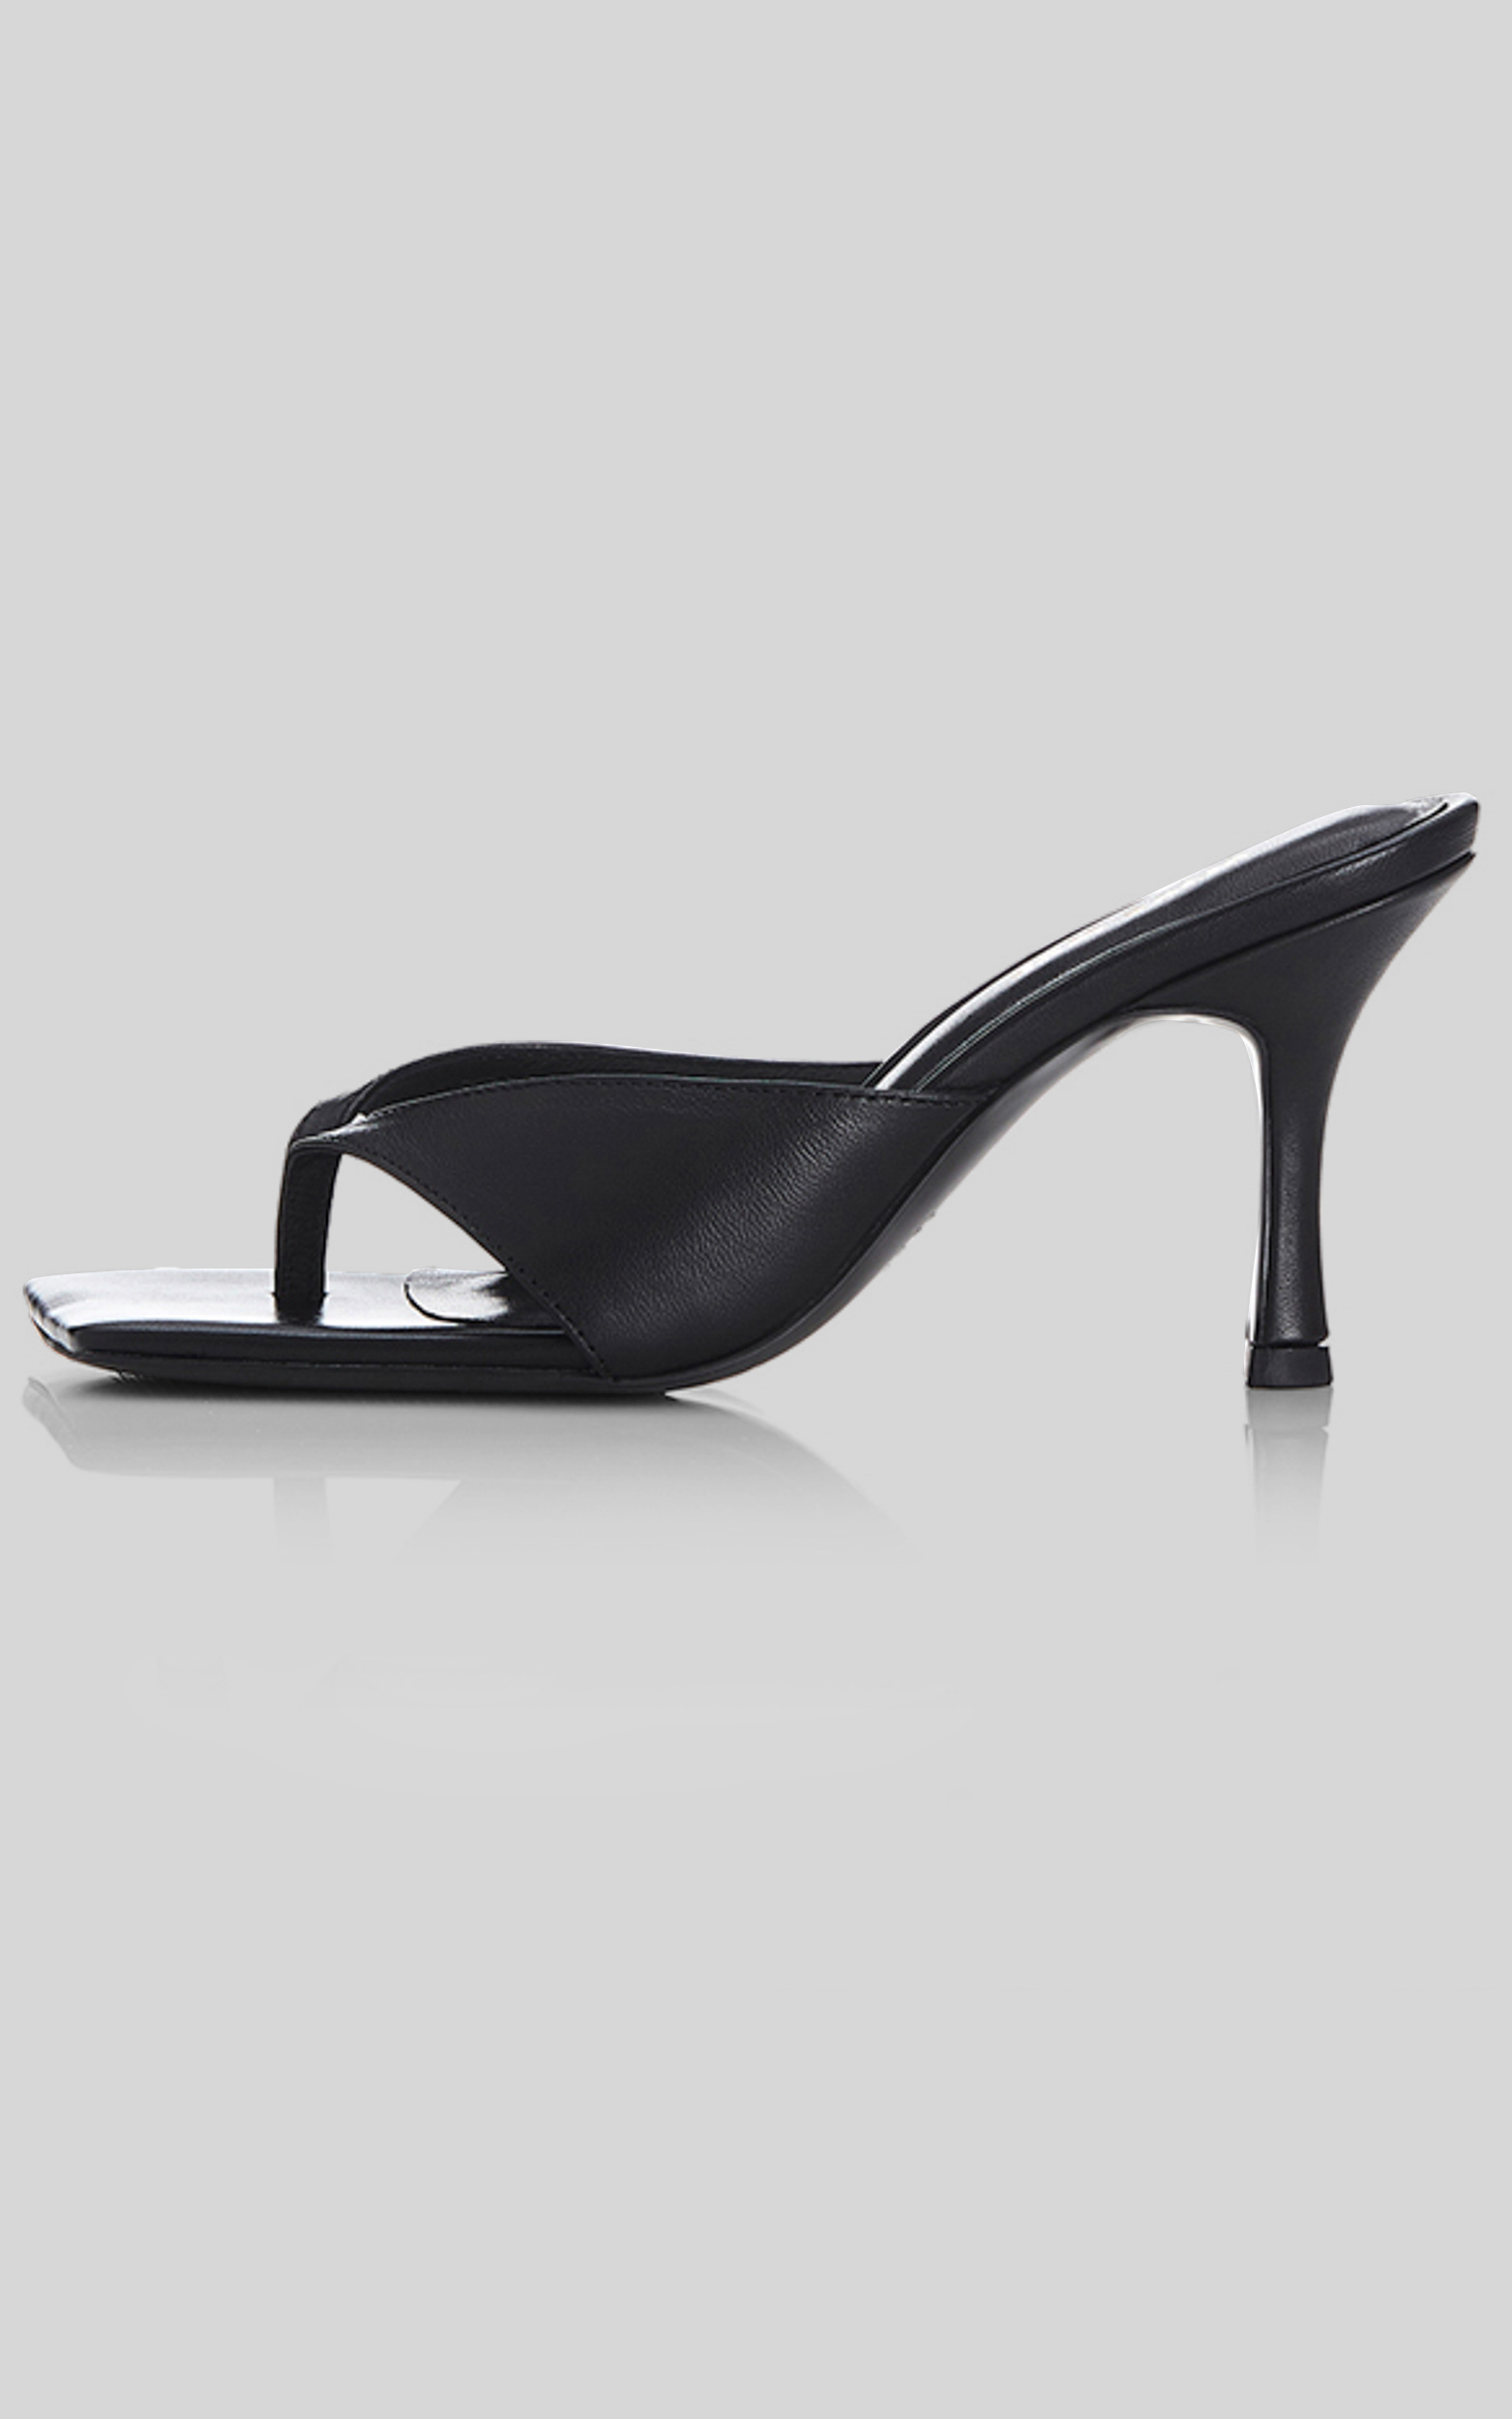 Alias Mae - Florence Heels in Black Leather - 10.5, BLK1, hi-res image number null